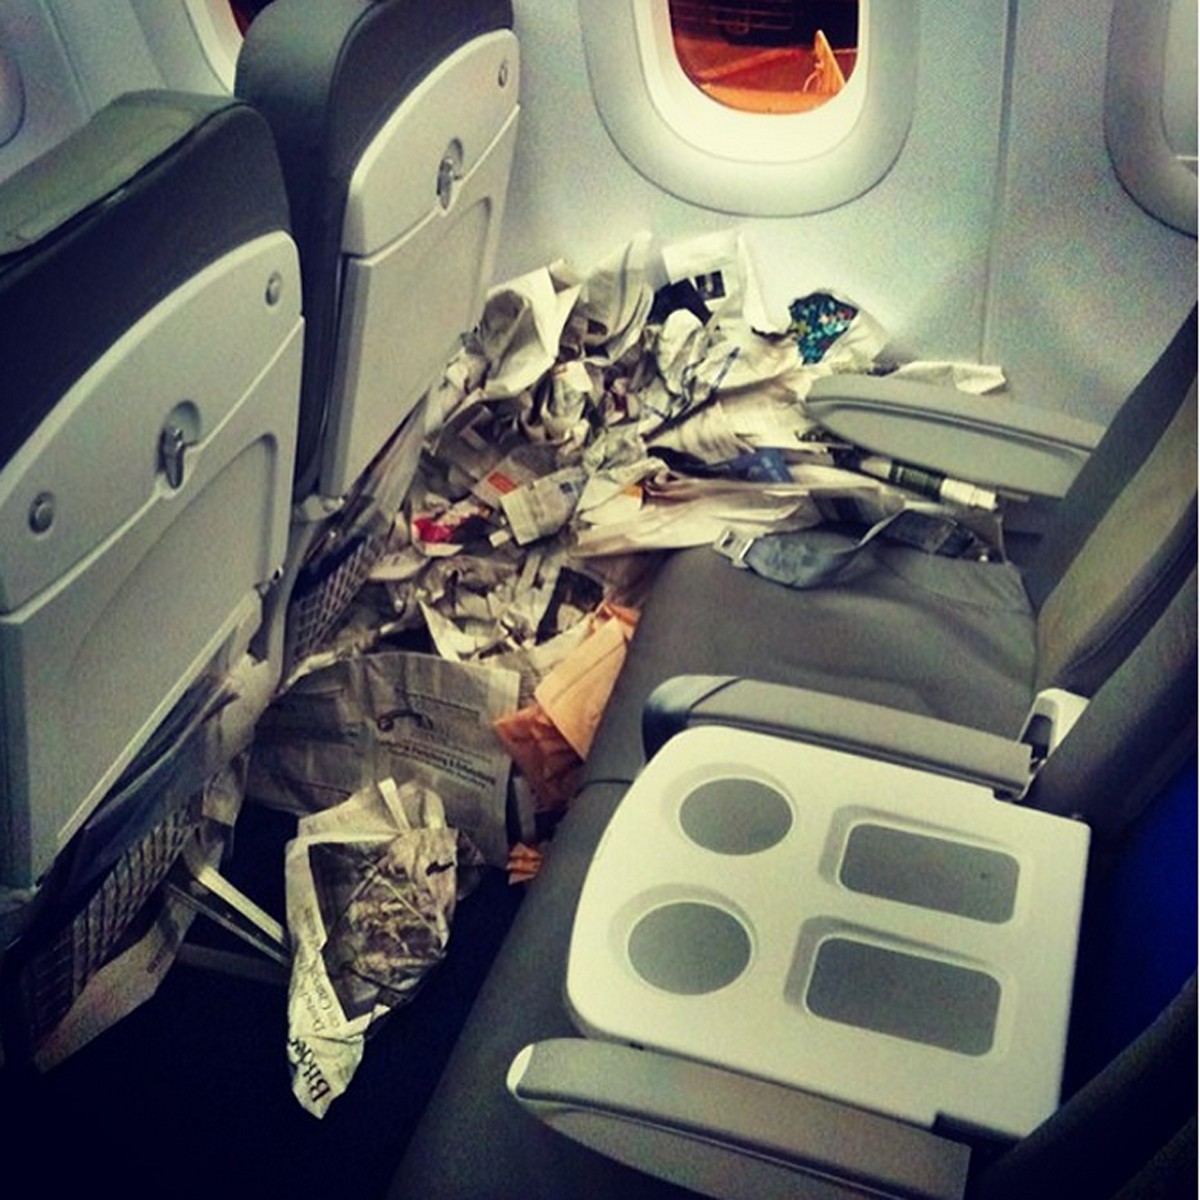 Passenger Shamingに投稿された写真、飛行機の座席に新聞紙が散乱…